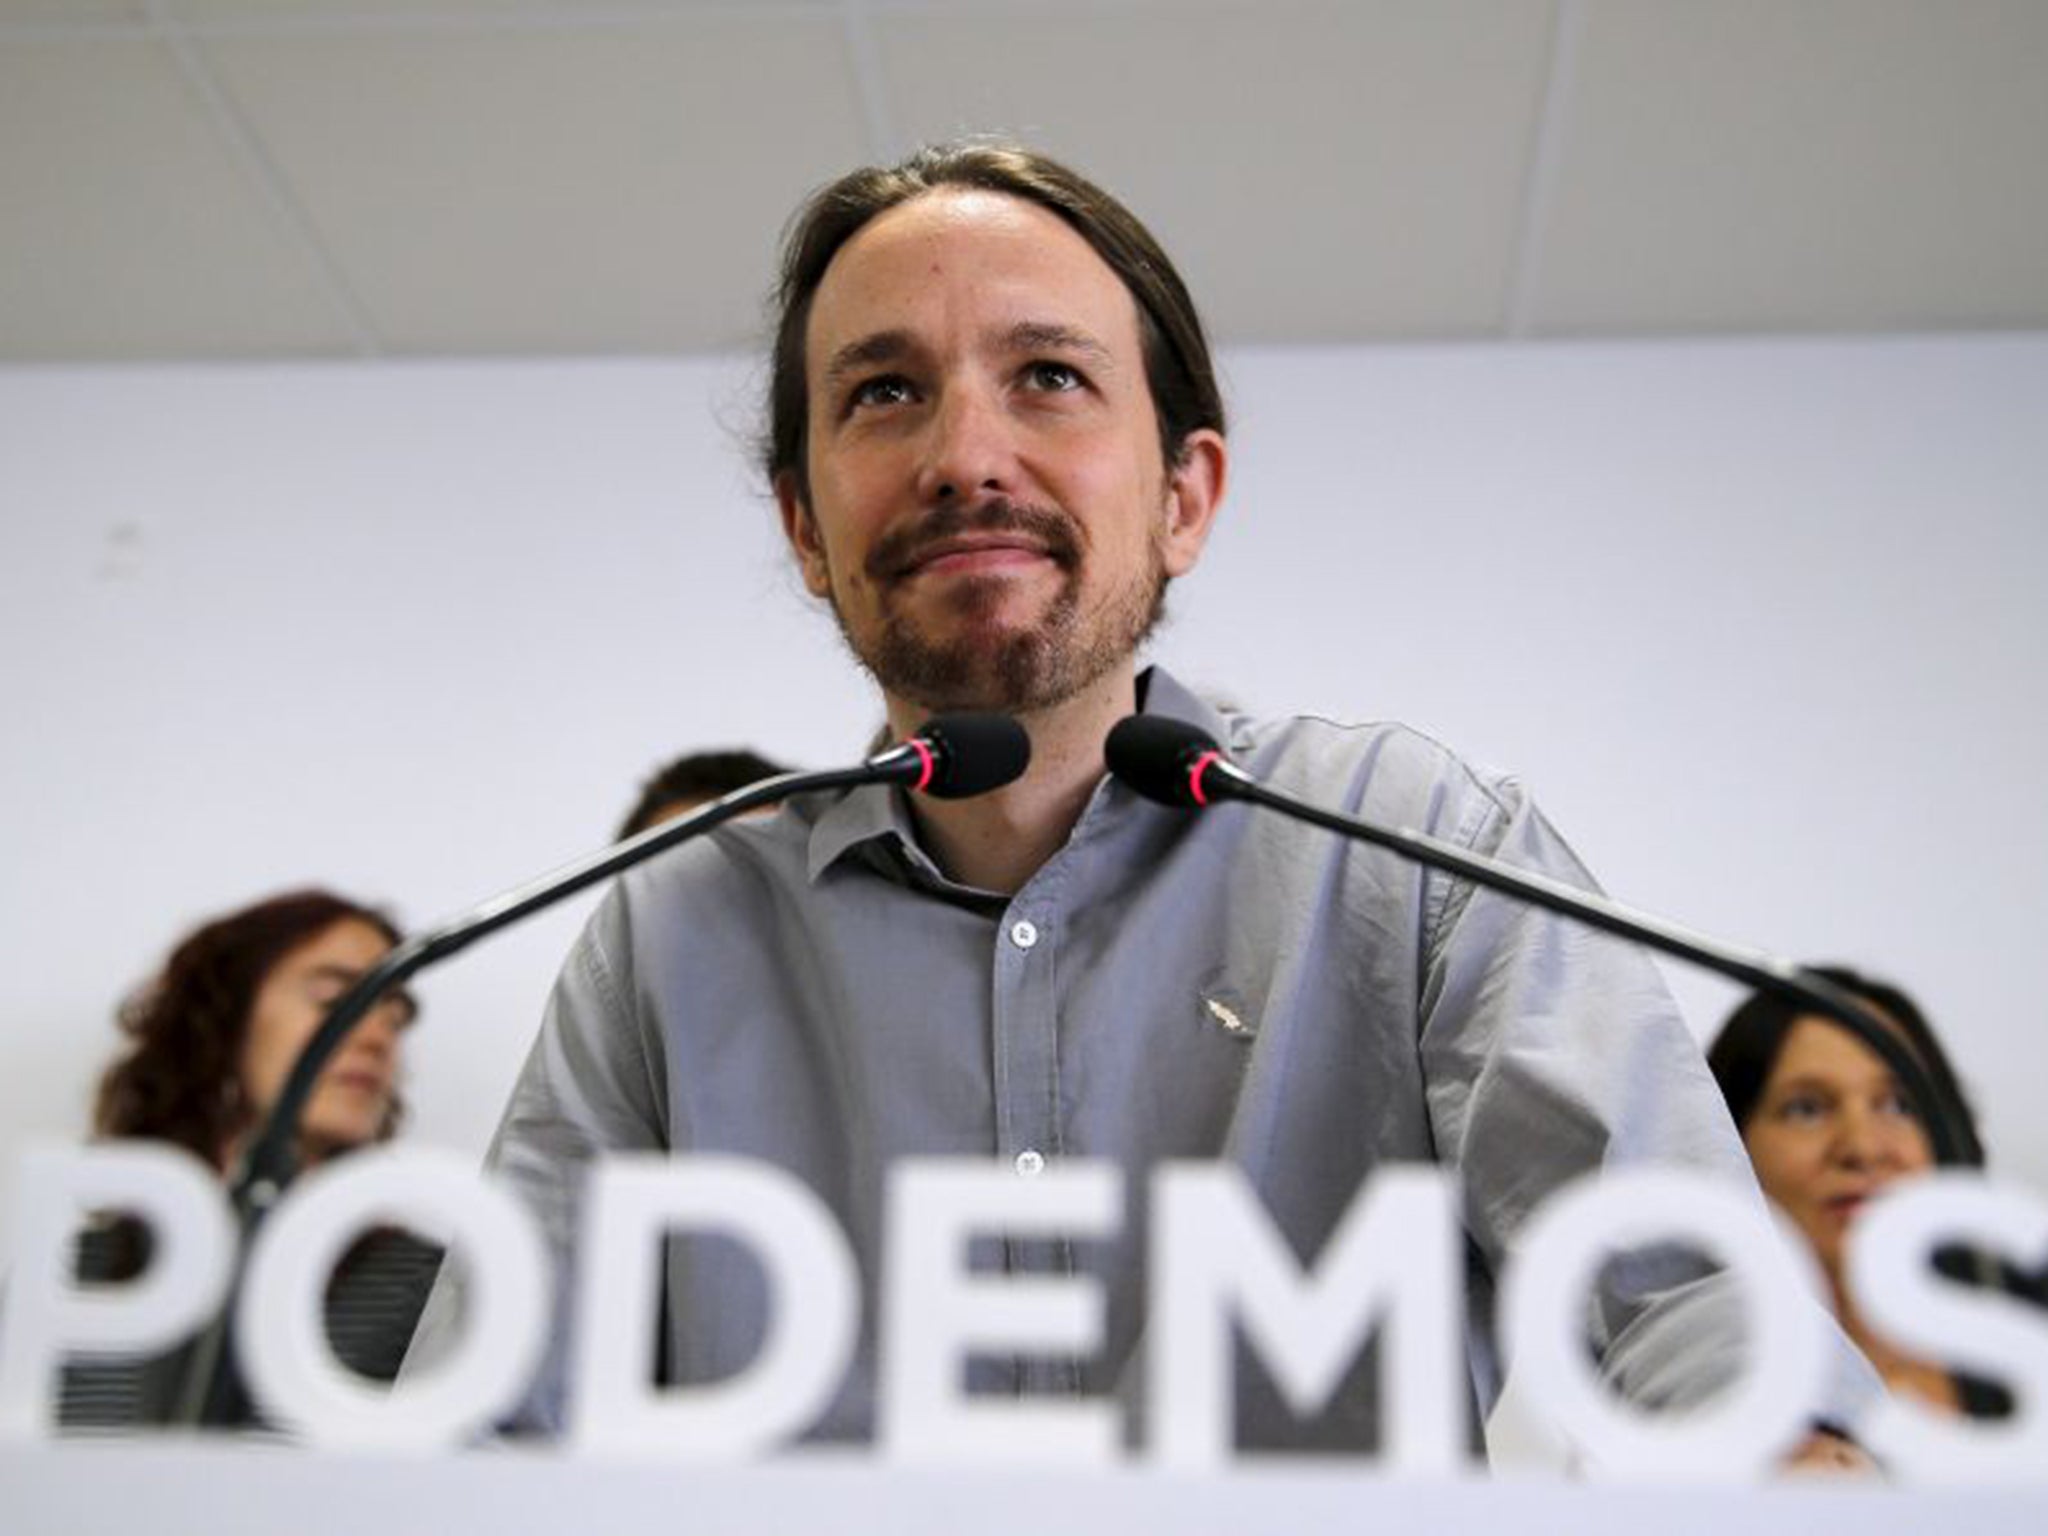 &#13;
Pablo Iglesias, the leader of Spain’s anti-austerity party Podemos &#13;